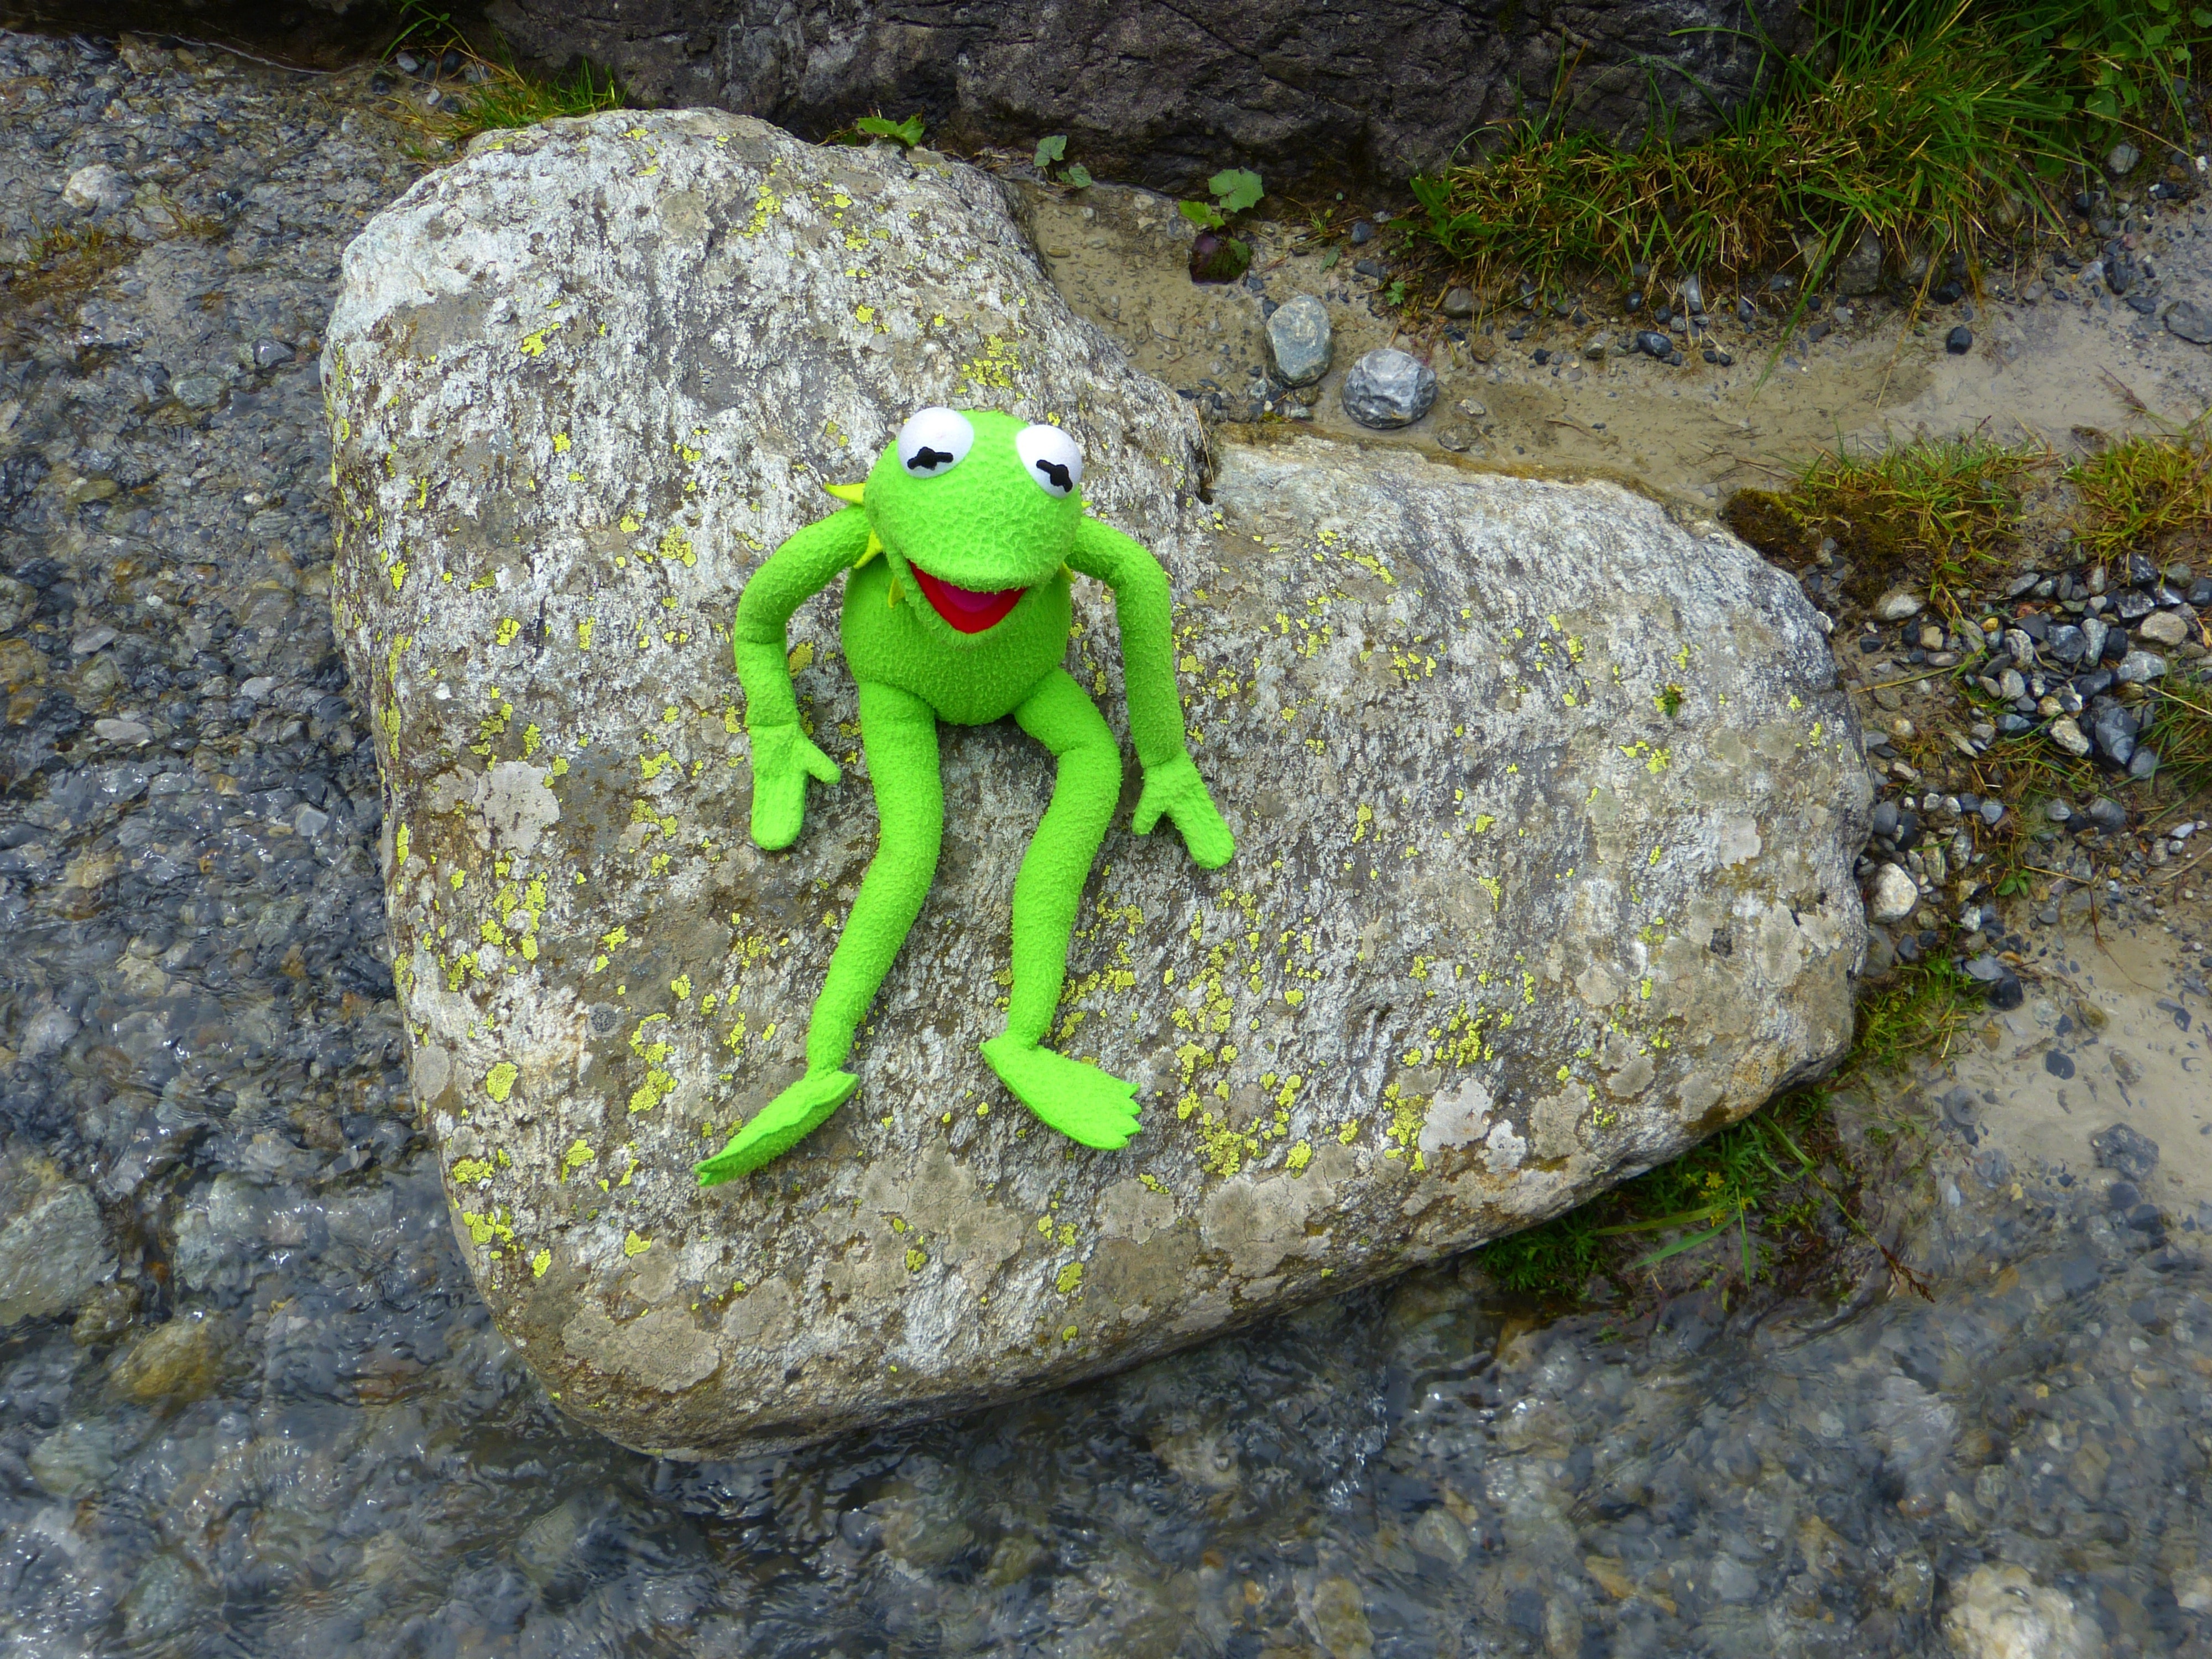 Kermit, Frog, Heart, Stone, Love, Nature, one animal, animal themes